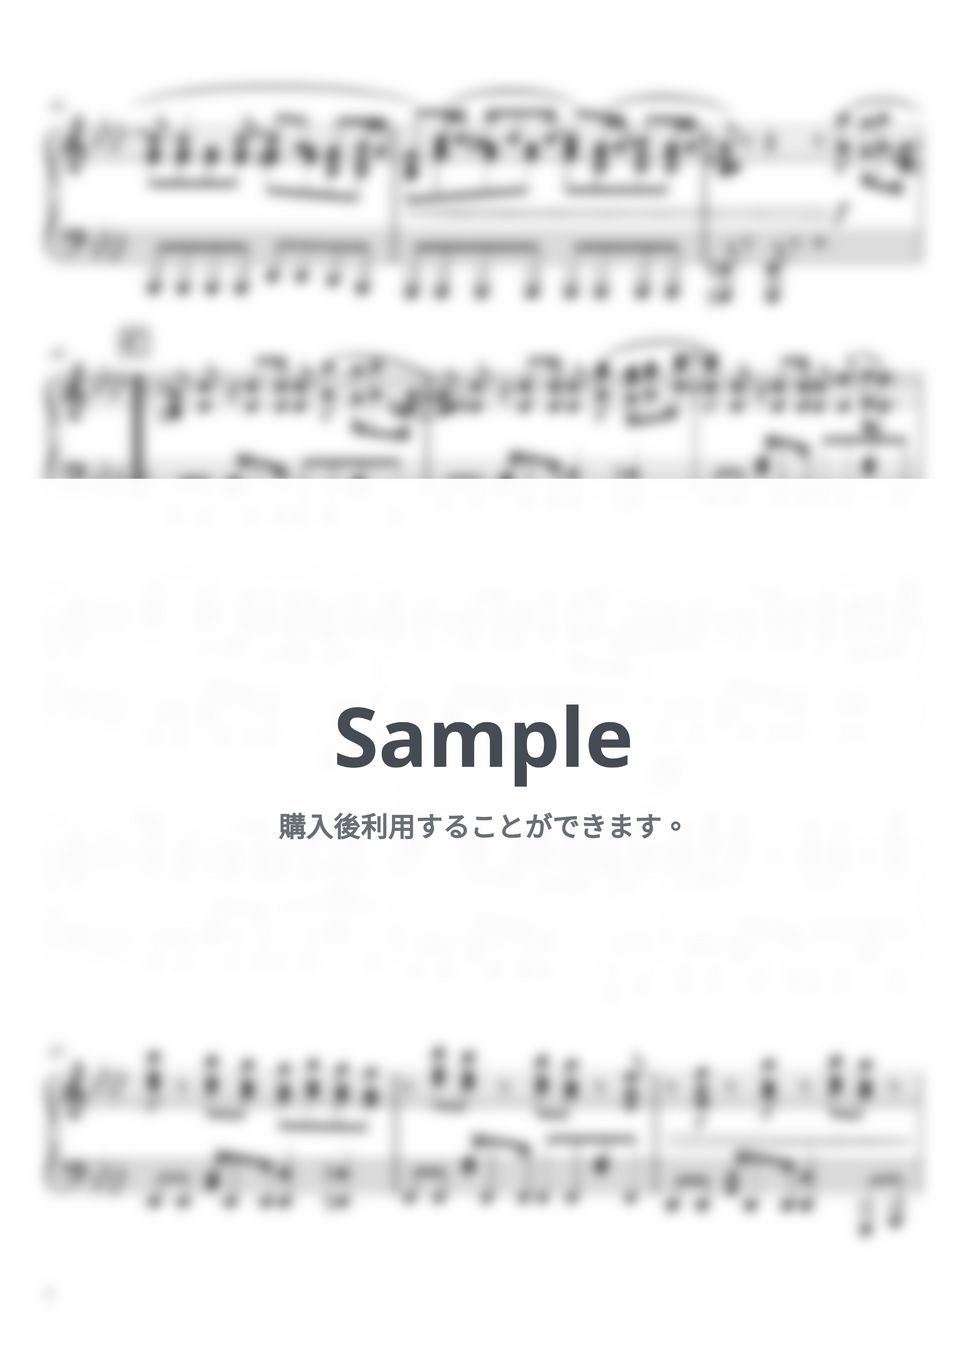 milet, Aimer, 幾田りら - おもかげ (produced by Vaundy) (ピアノソロ / 上級) by SuperMomoFactory